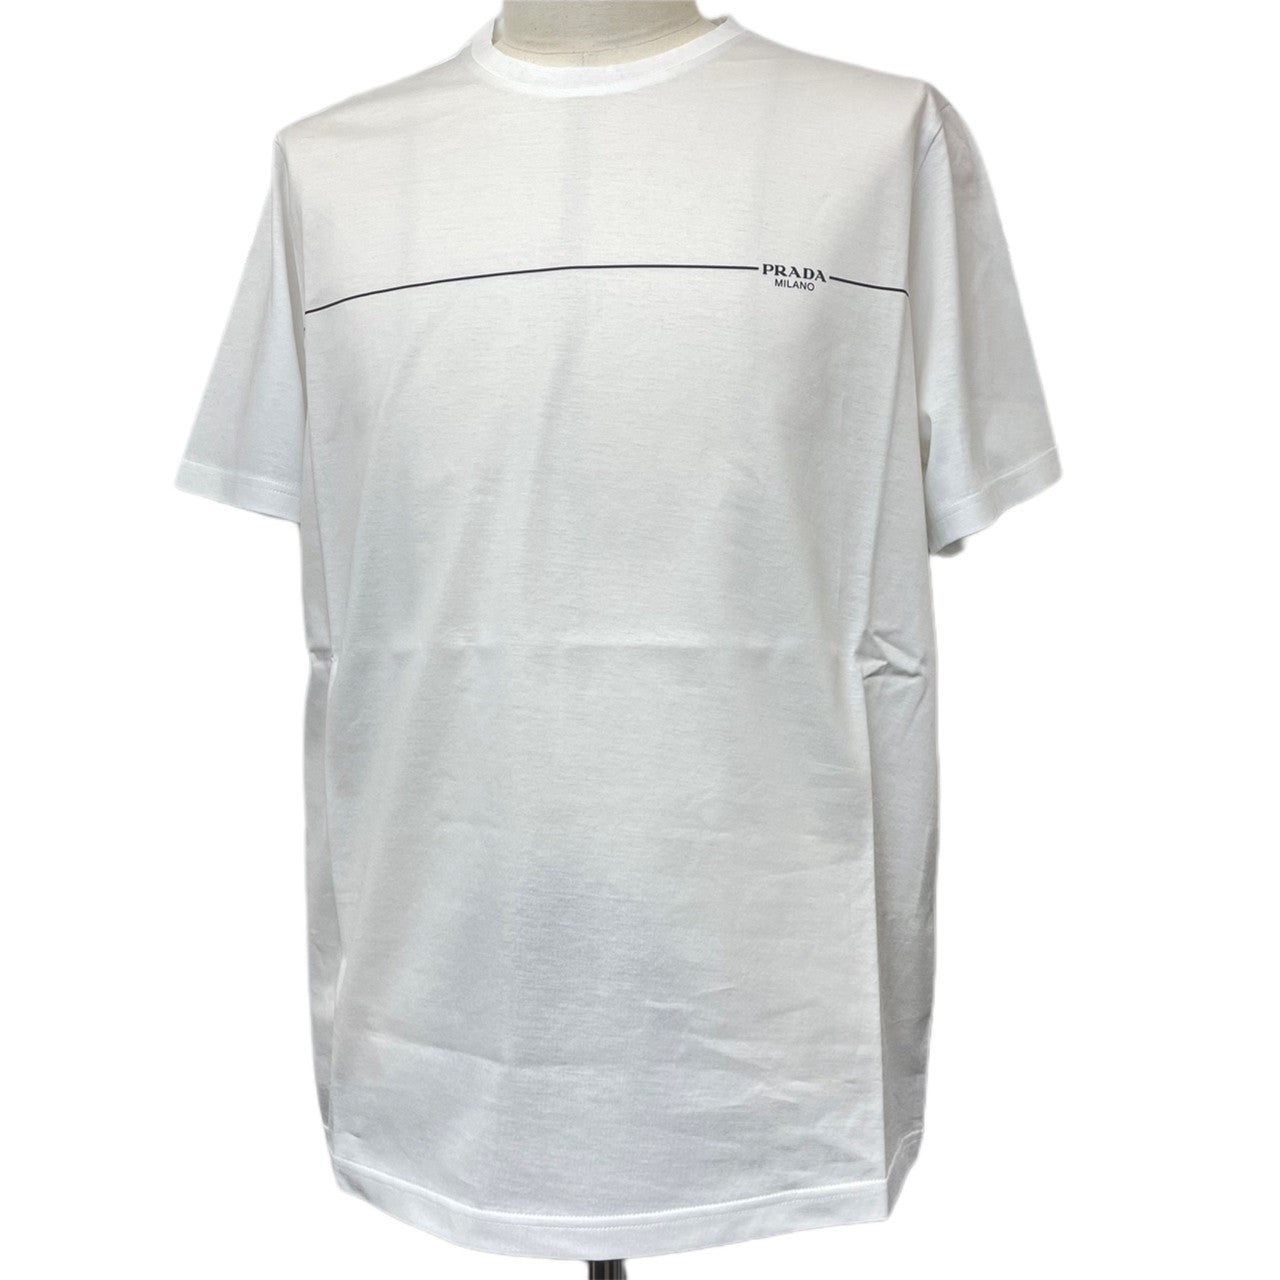 PRADA プラダ ロゴプリント コットン半袖Tシャツ ホワイト UJN656 R201 1WPG